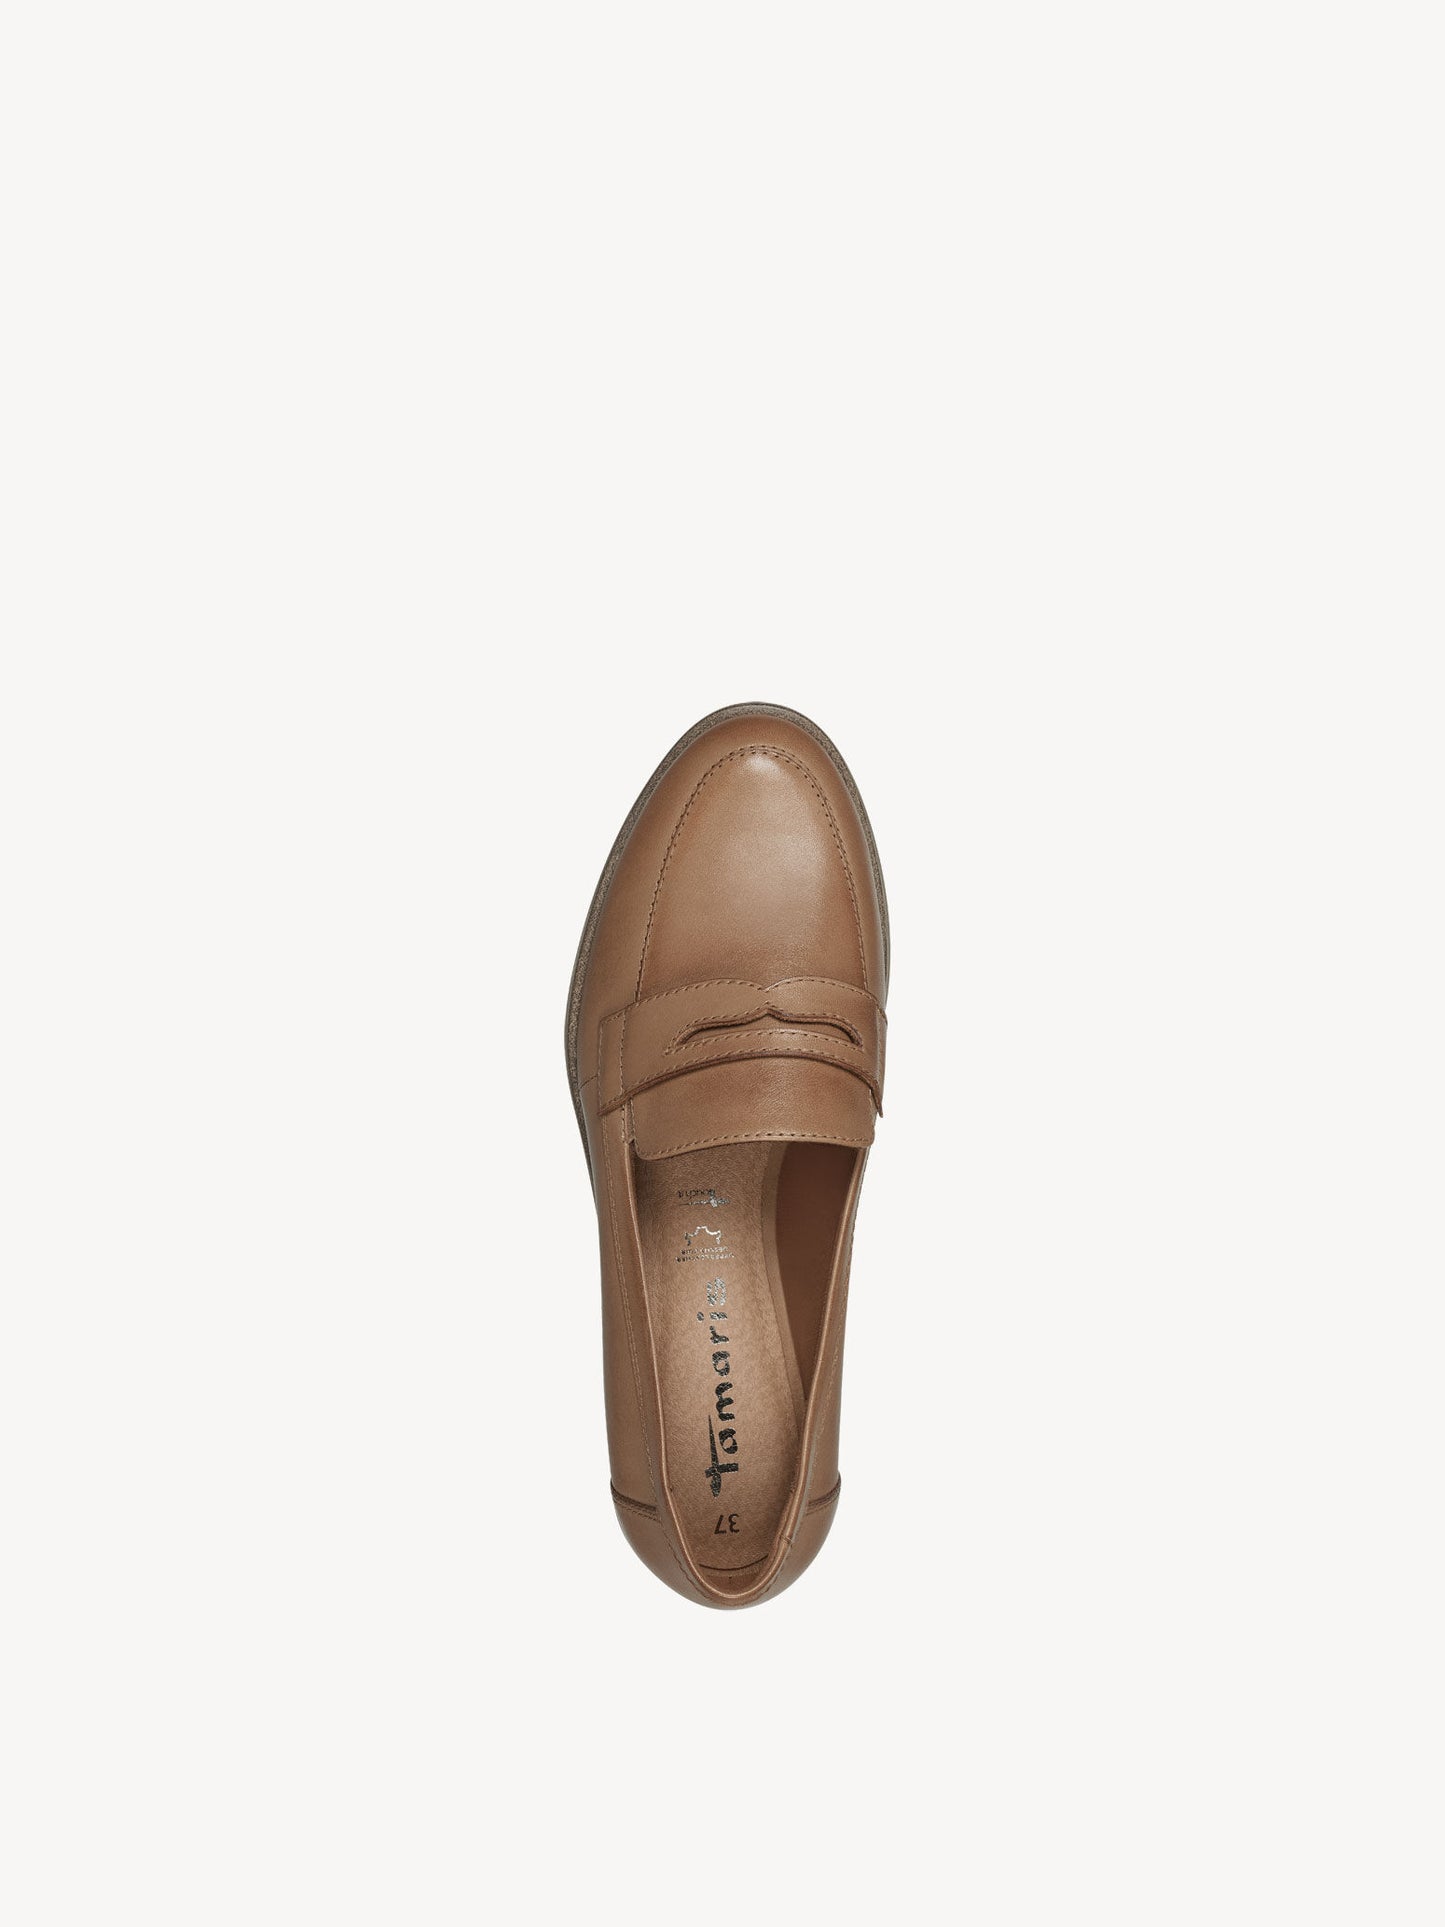 Tamaris Women's 1-1-24215-20 444 Leather Slipper Shoes Nut Brown